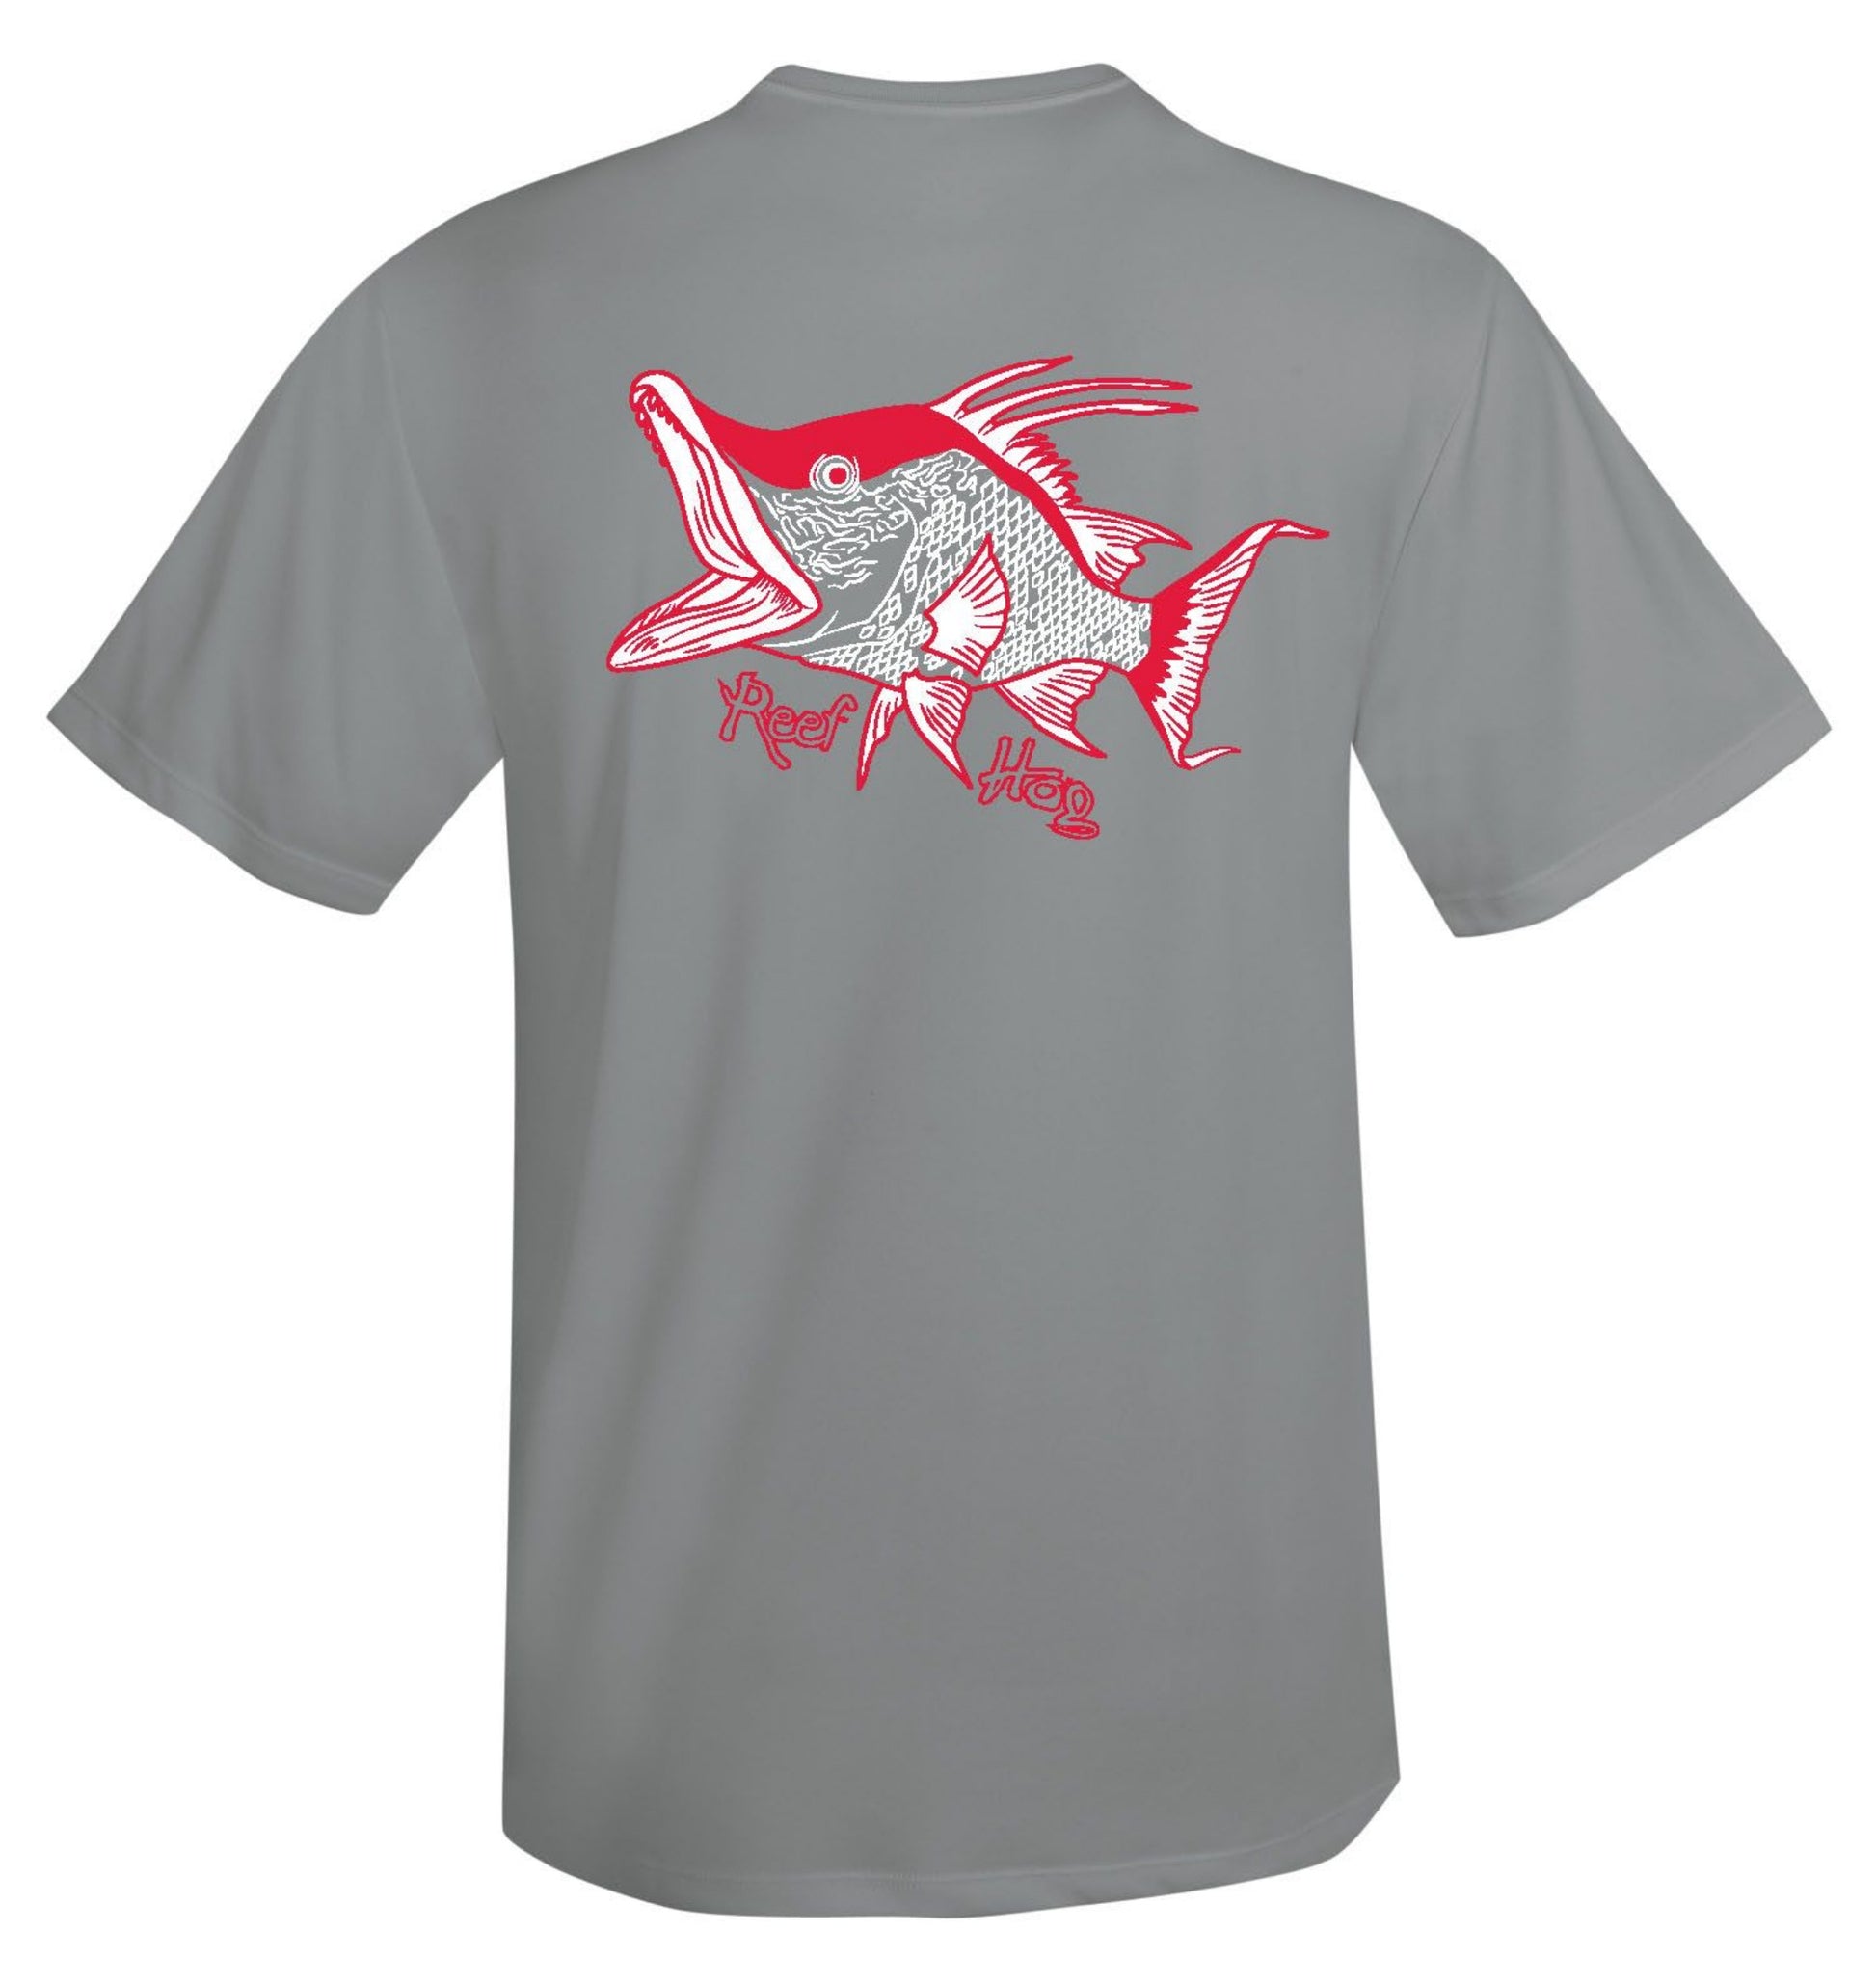 Hogfish Reef Hog Performance Dry-Fit Fishing 50+Upf Sun Shirts M / Gray S/S - unisex